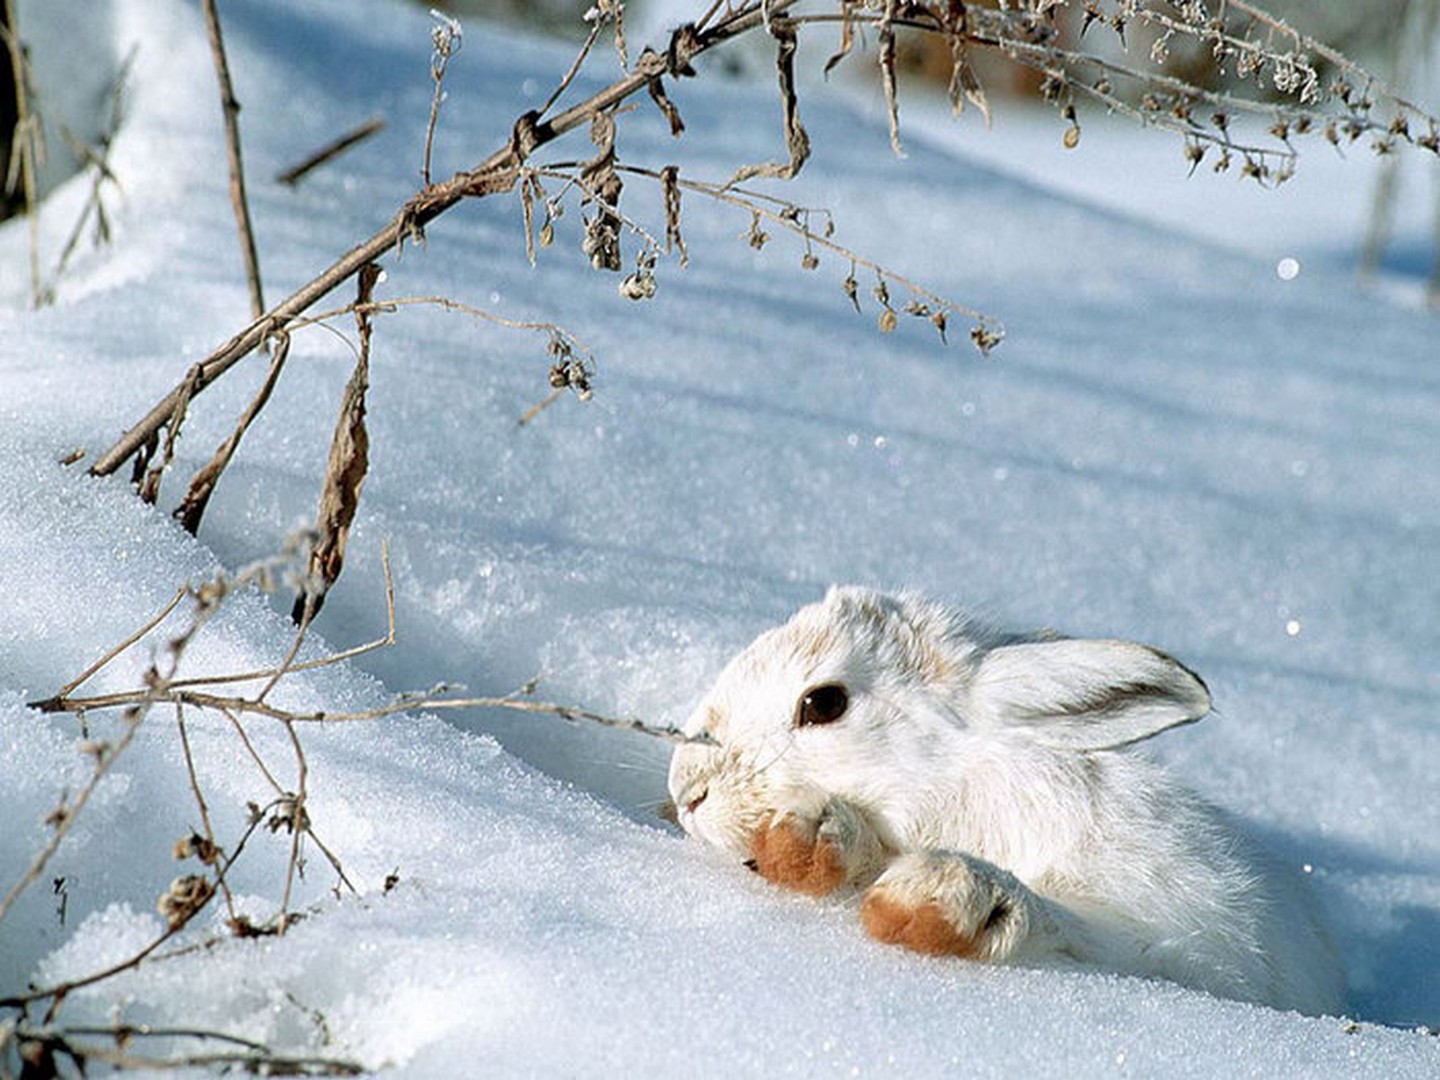 Заяц на снегу фото